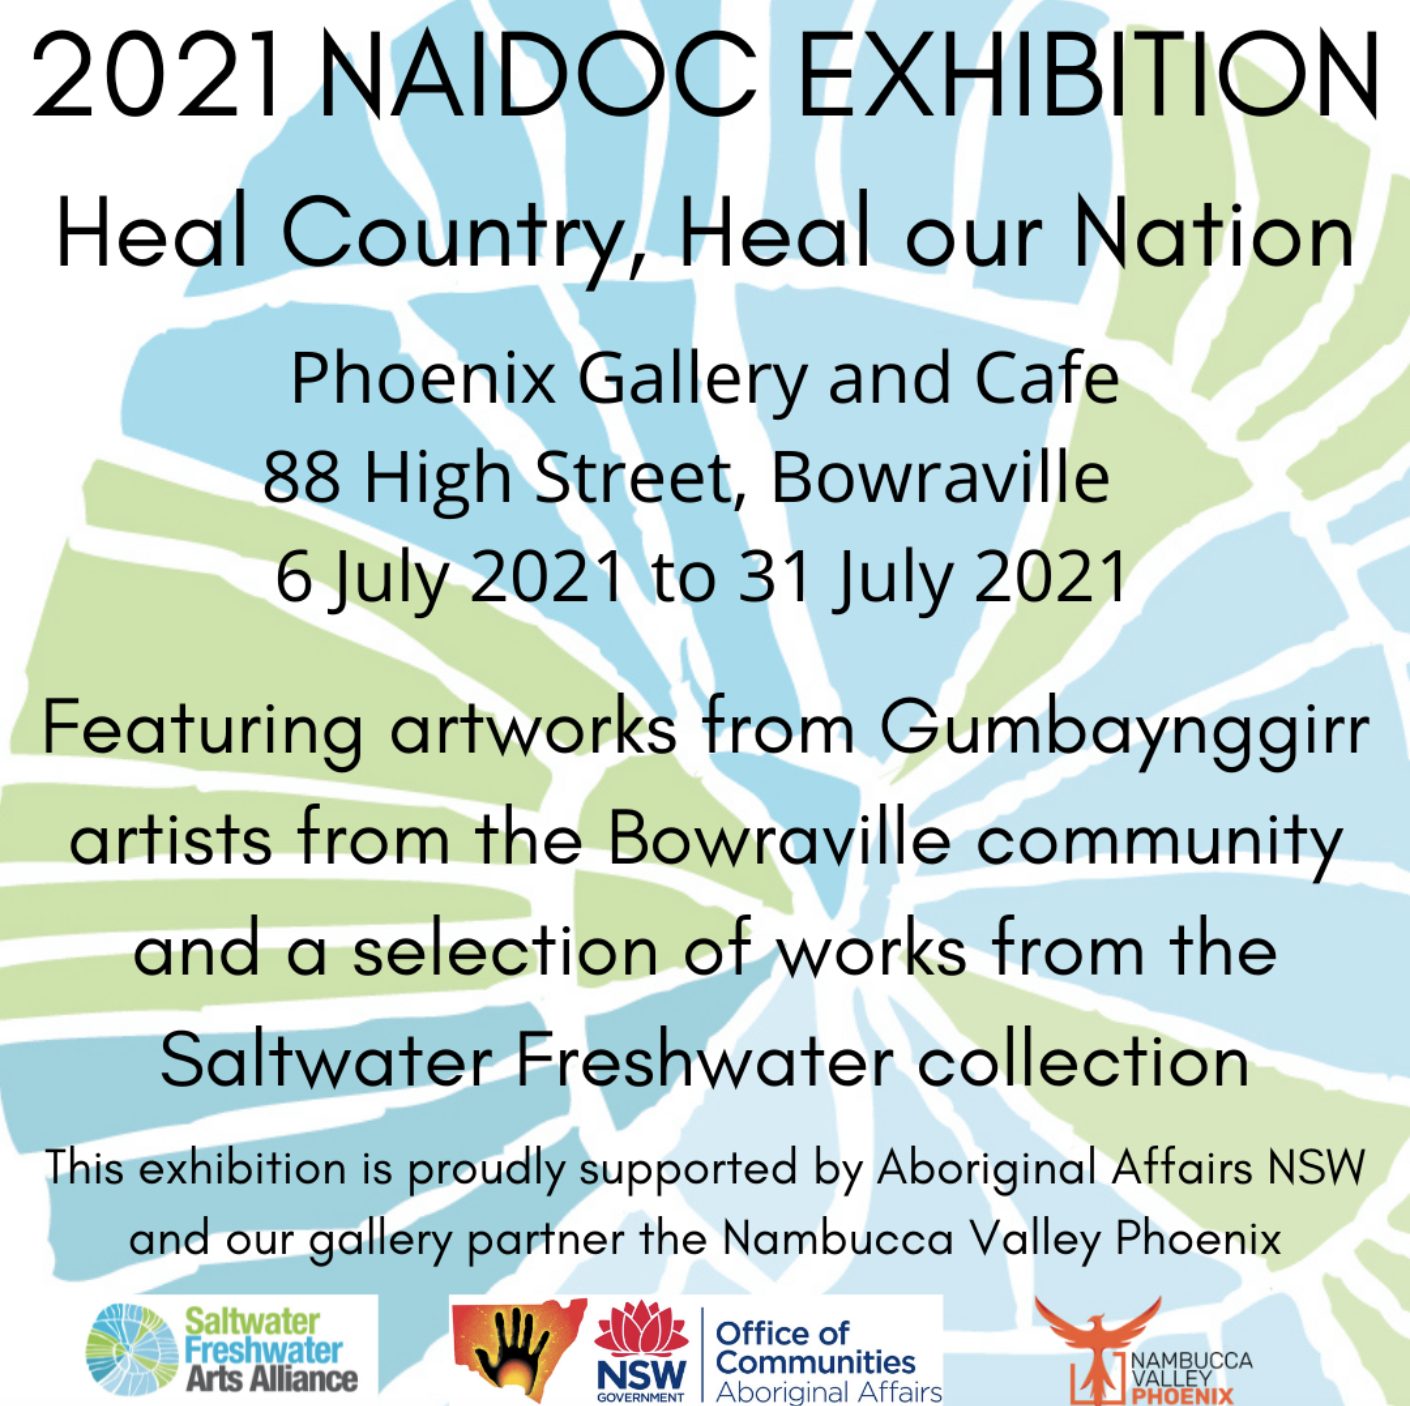 2021 NAIDOC Exhibition